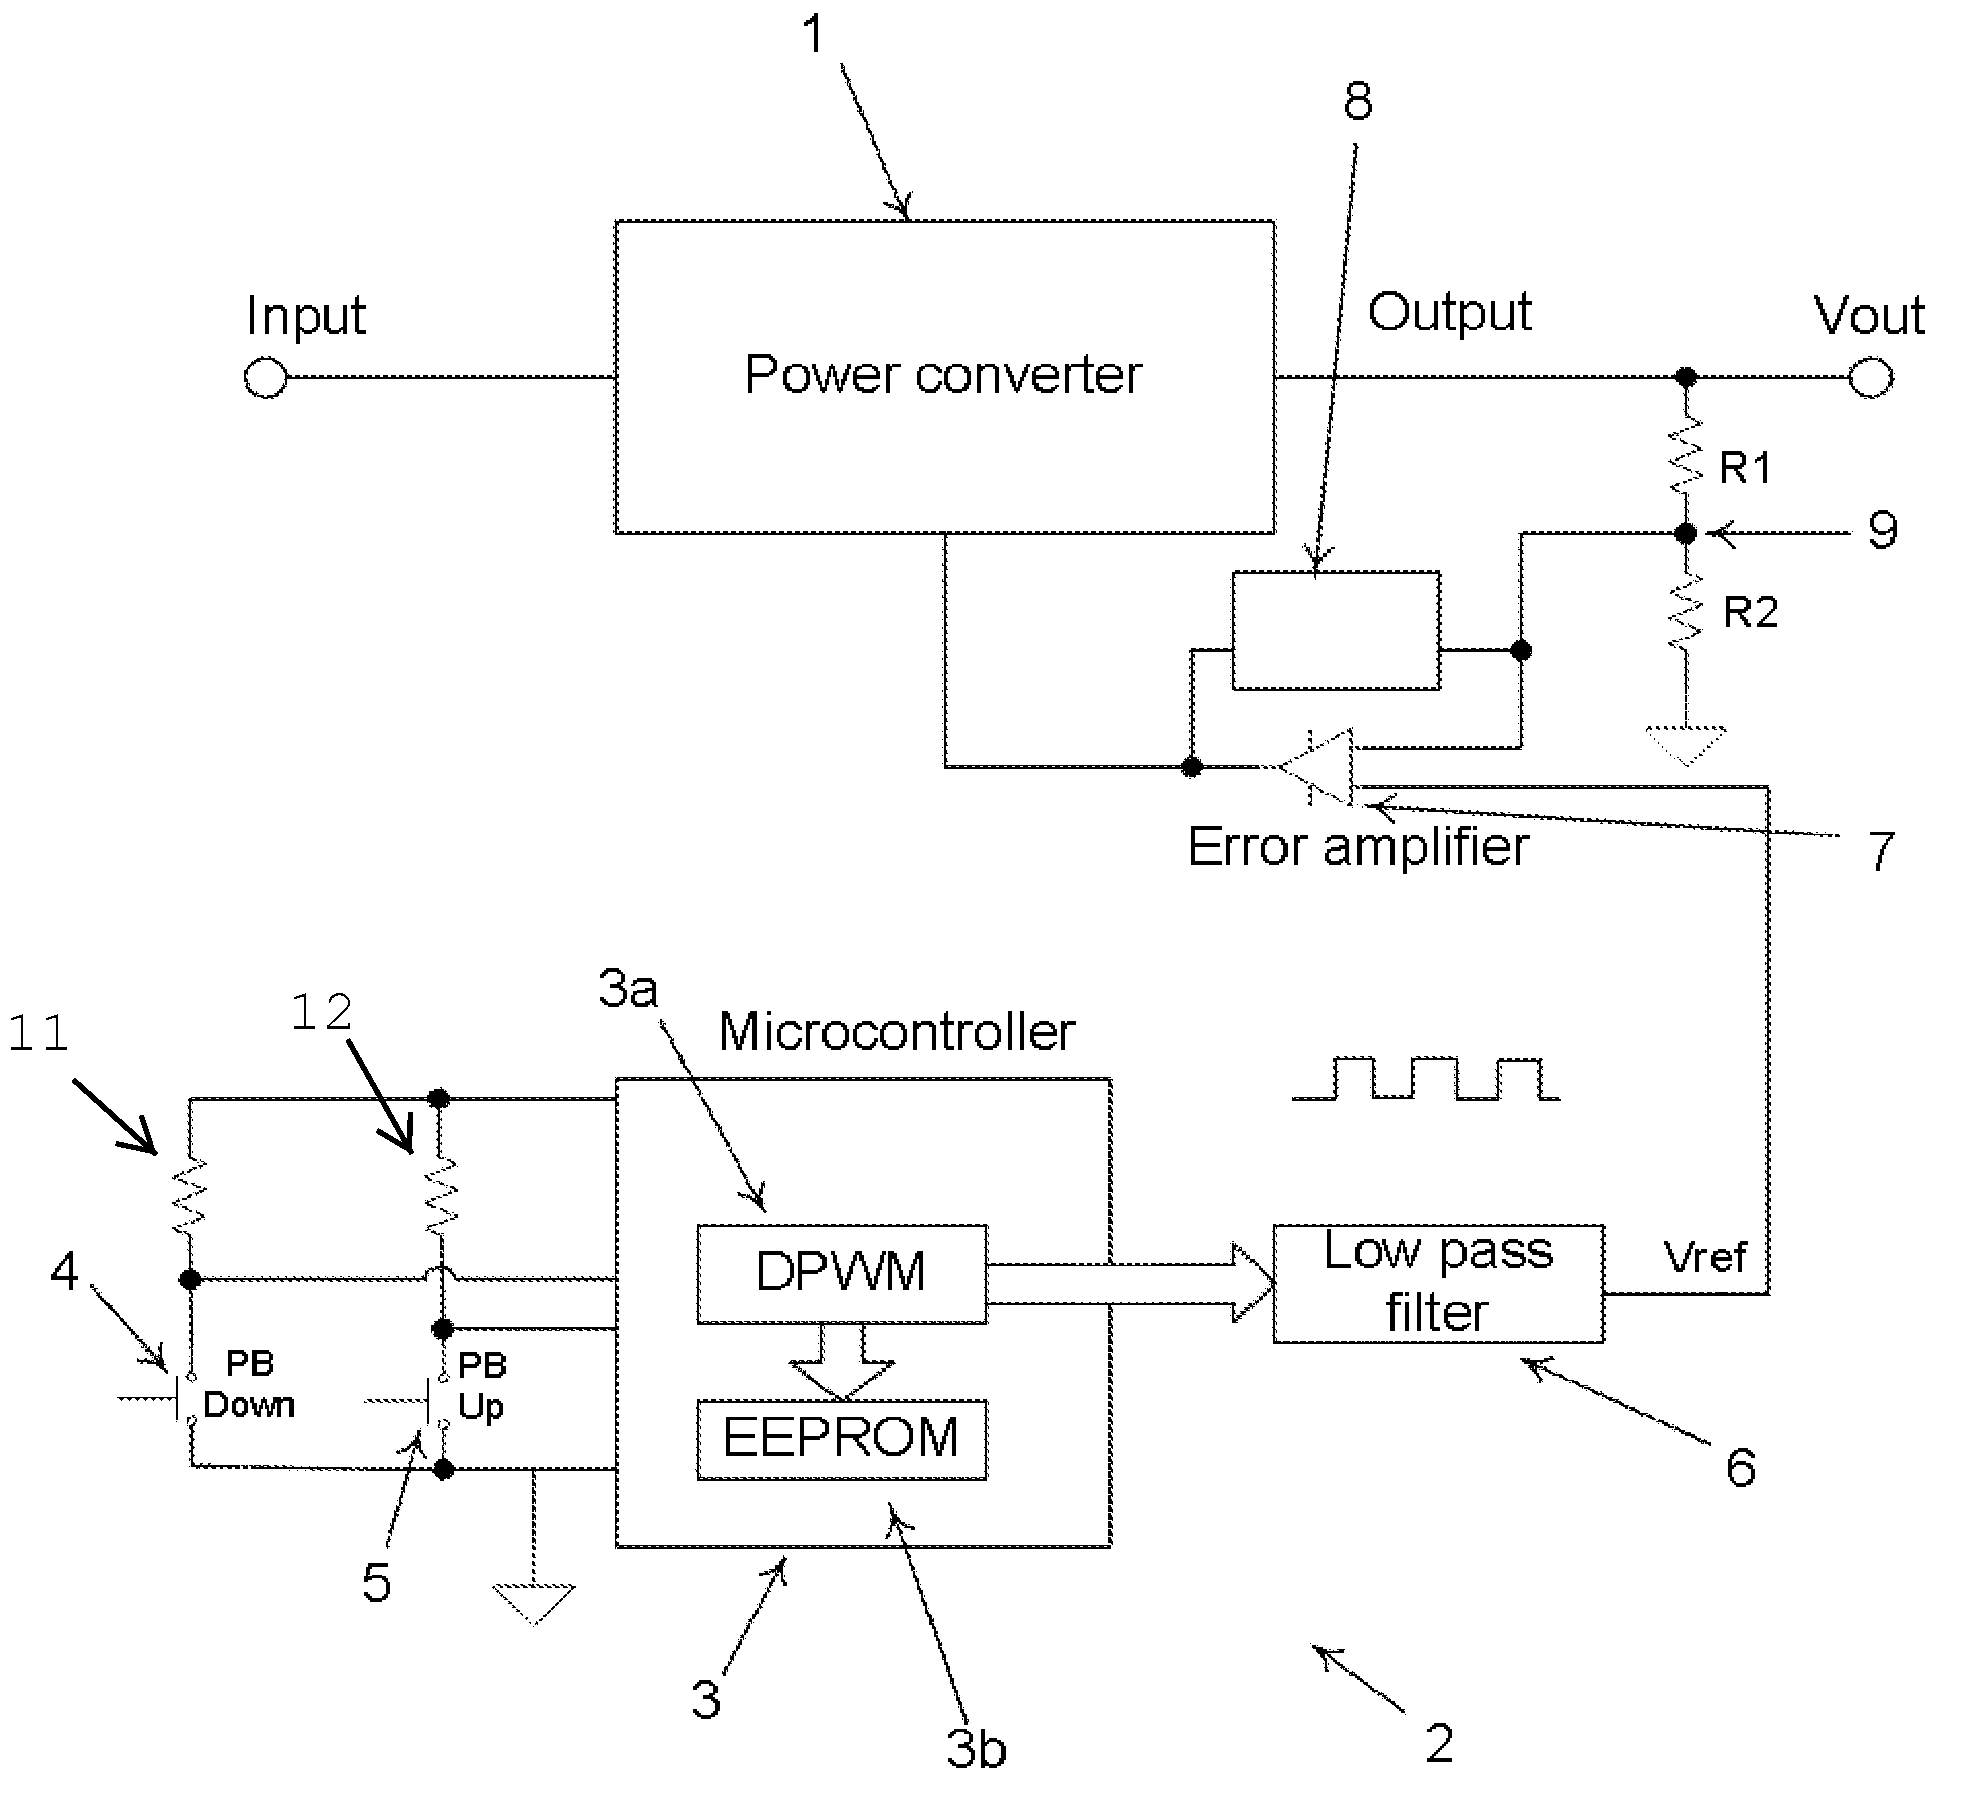 Output voltage control circuit for modular power supplies